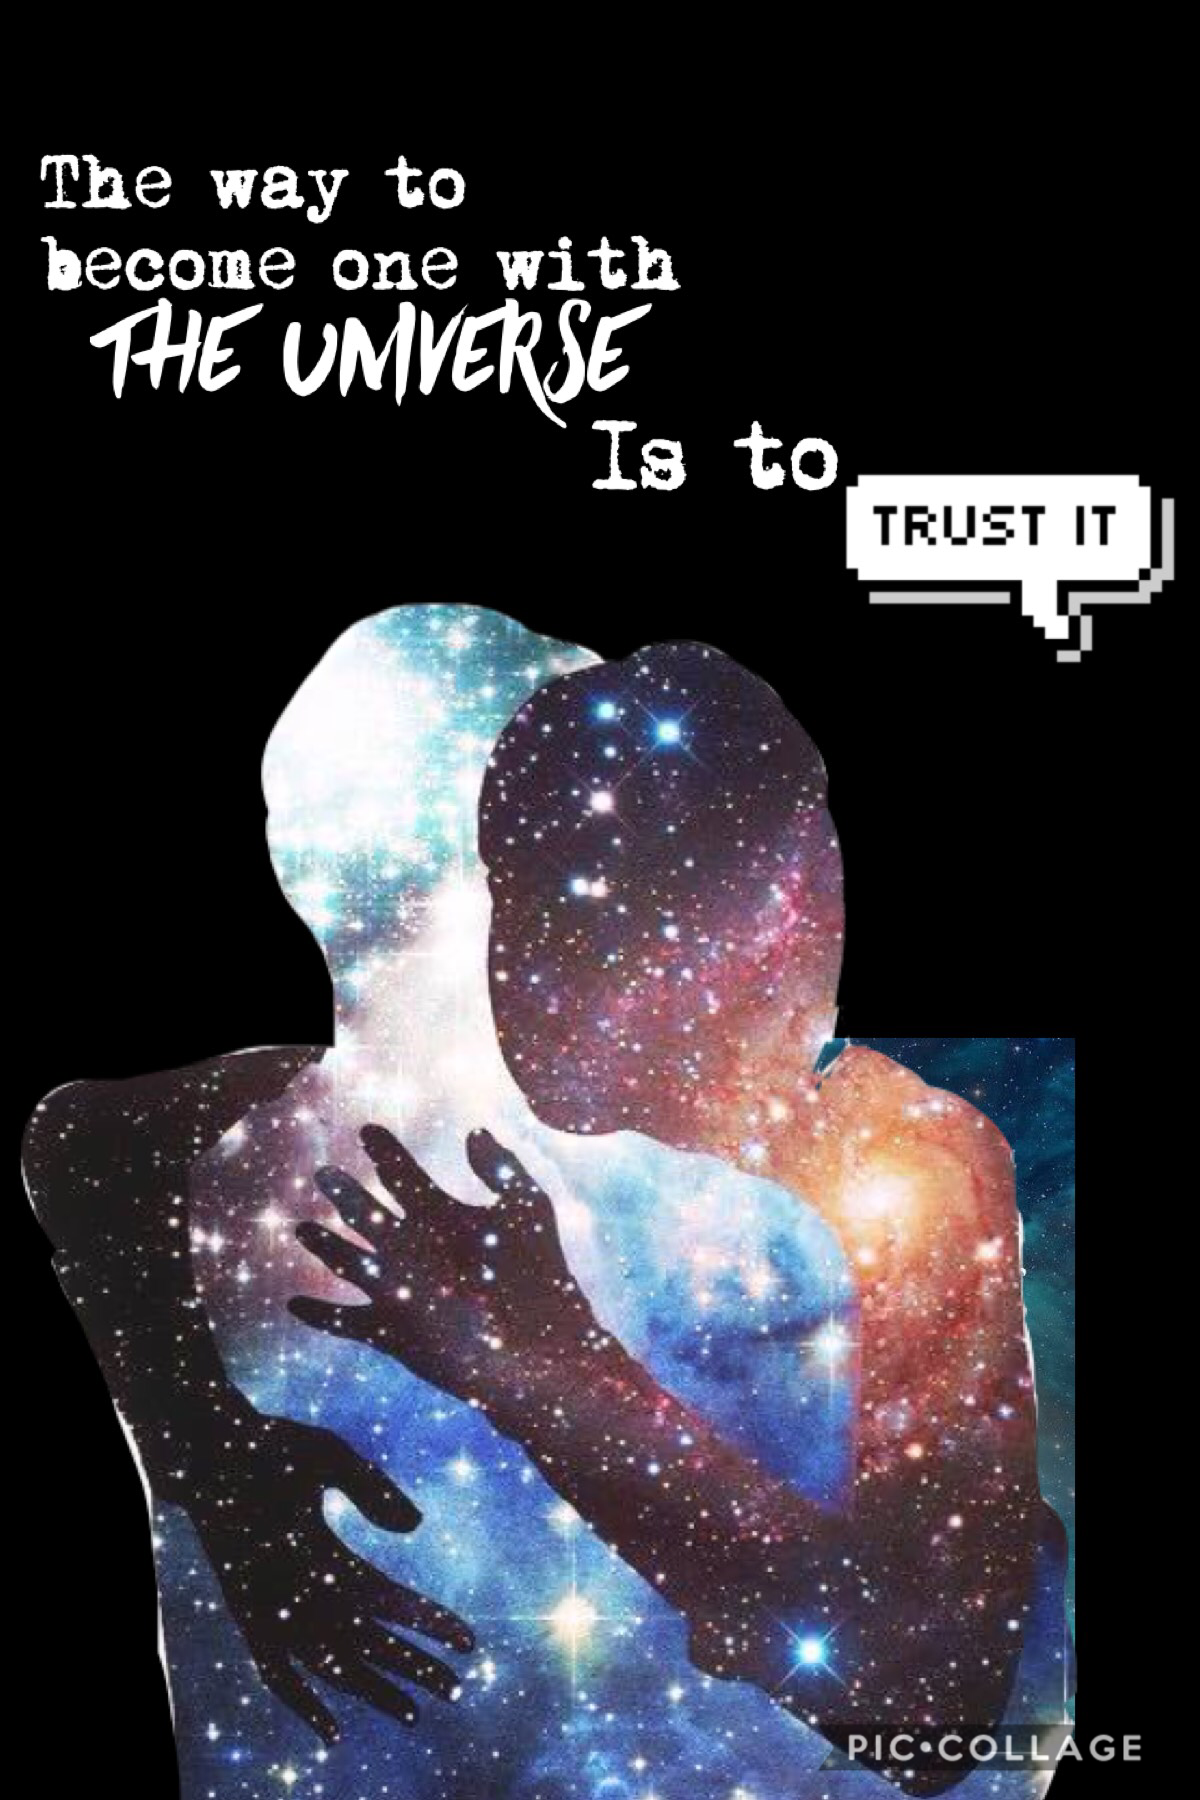 Universe 